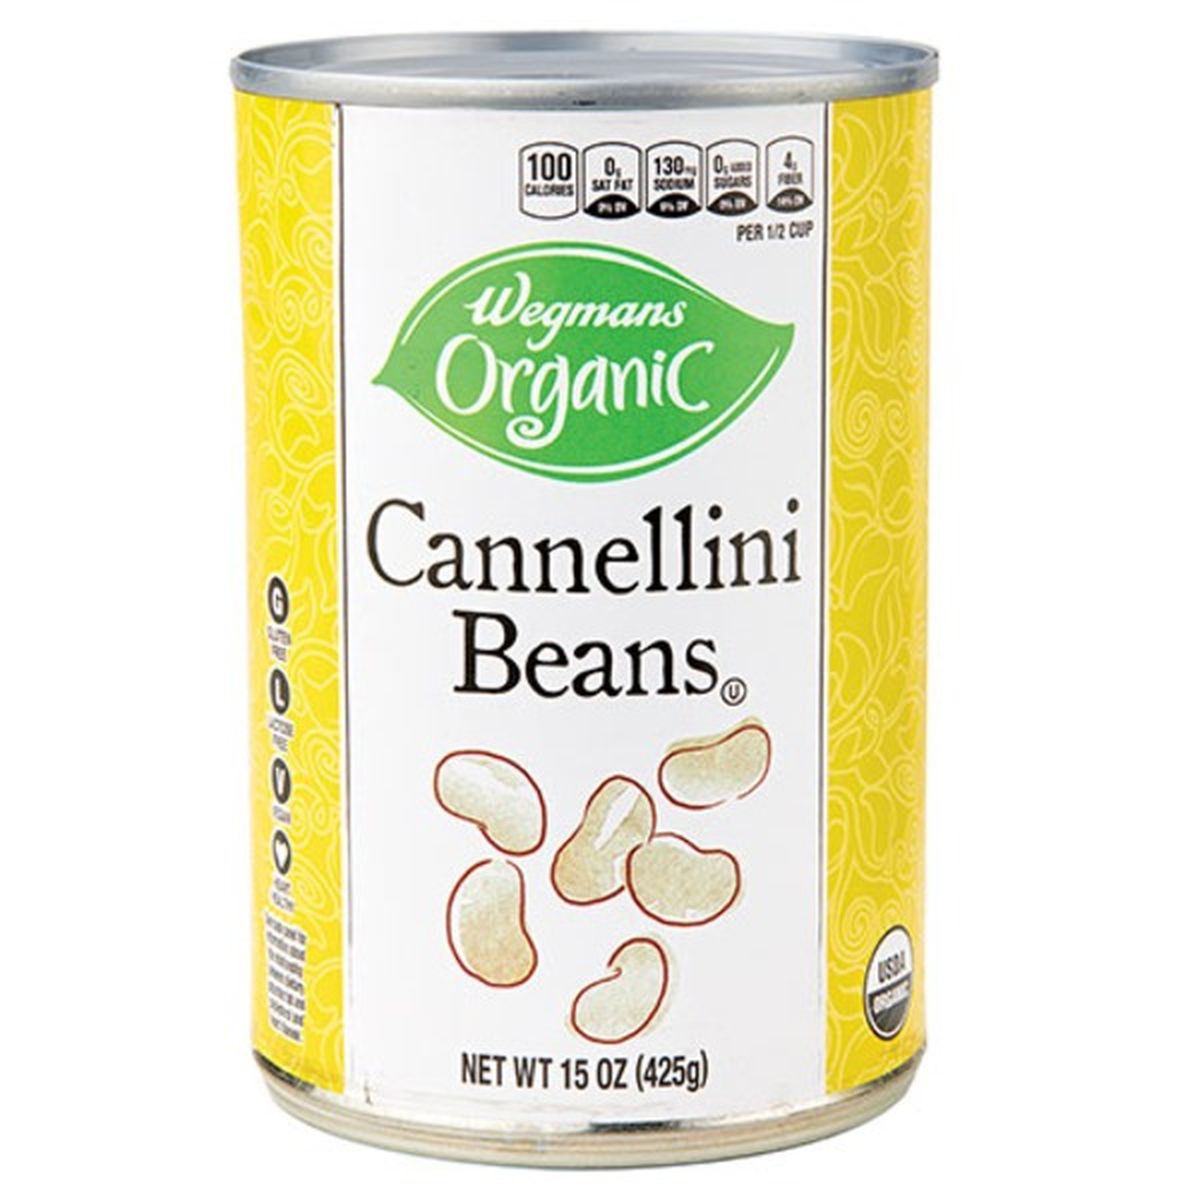 Calories in Wegmans Organic Cannellini Beans